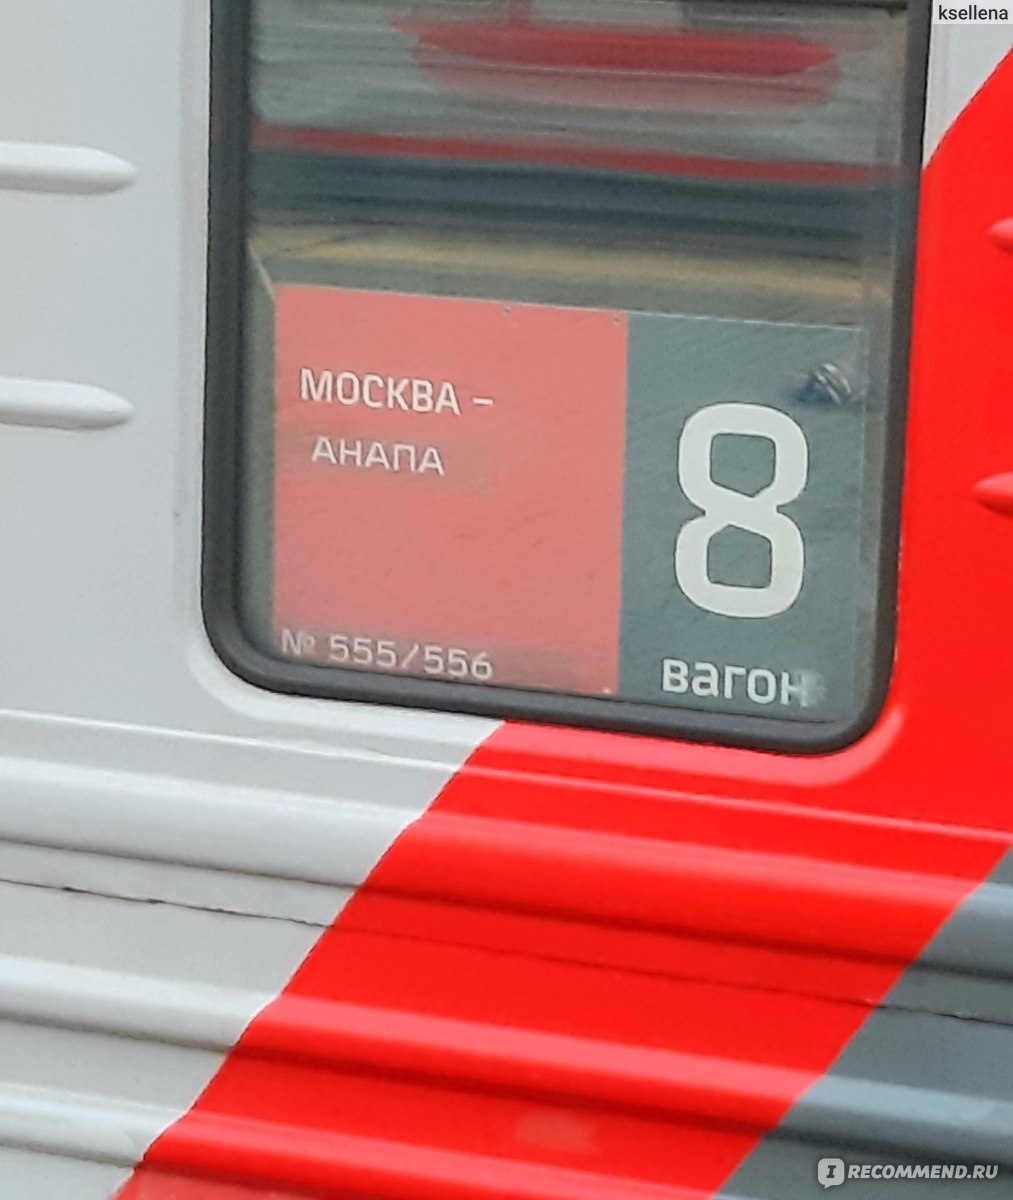 поезд 012м москва анапа фото св вагона